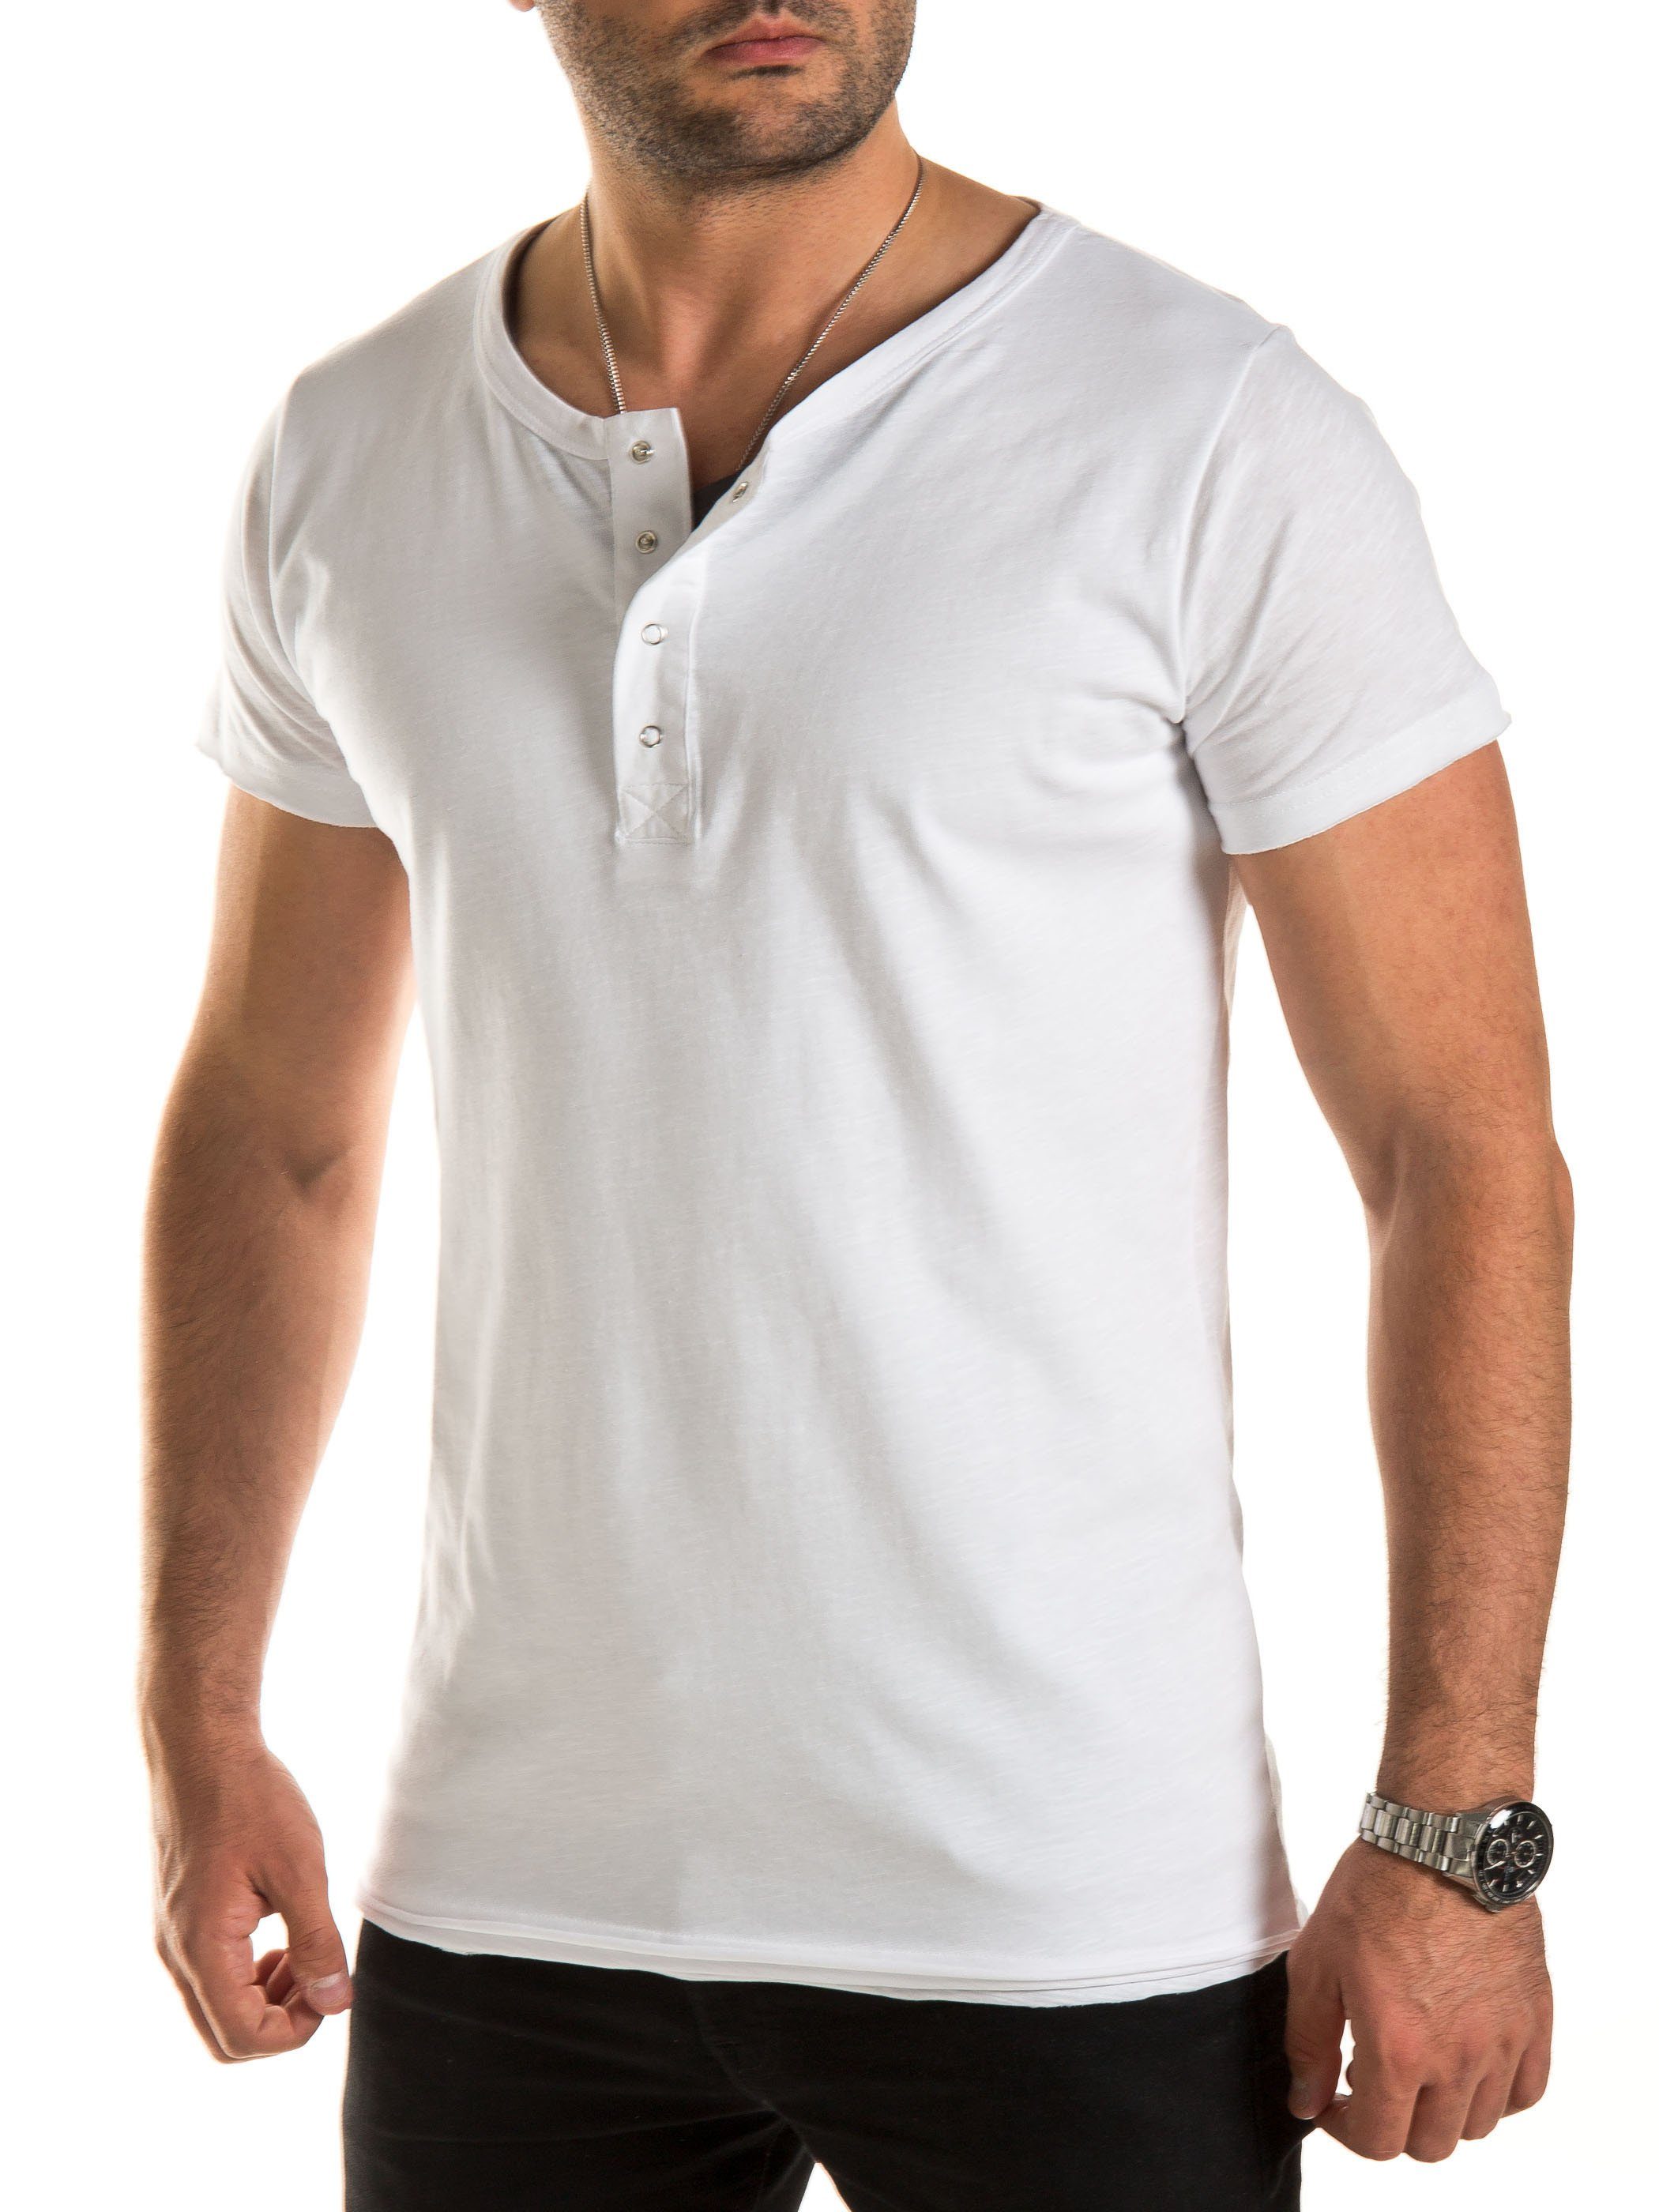 Double T-Shirt Pete (Packung) V-Neck WOTEGA V-Neck Layer Double dancer Pete (cloud T-Shirt 114201) Layer T-Shirt Weiß